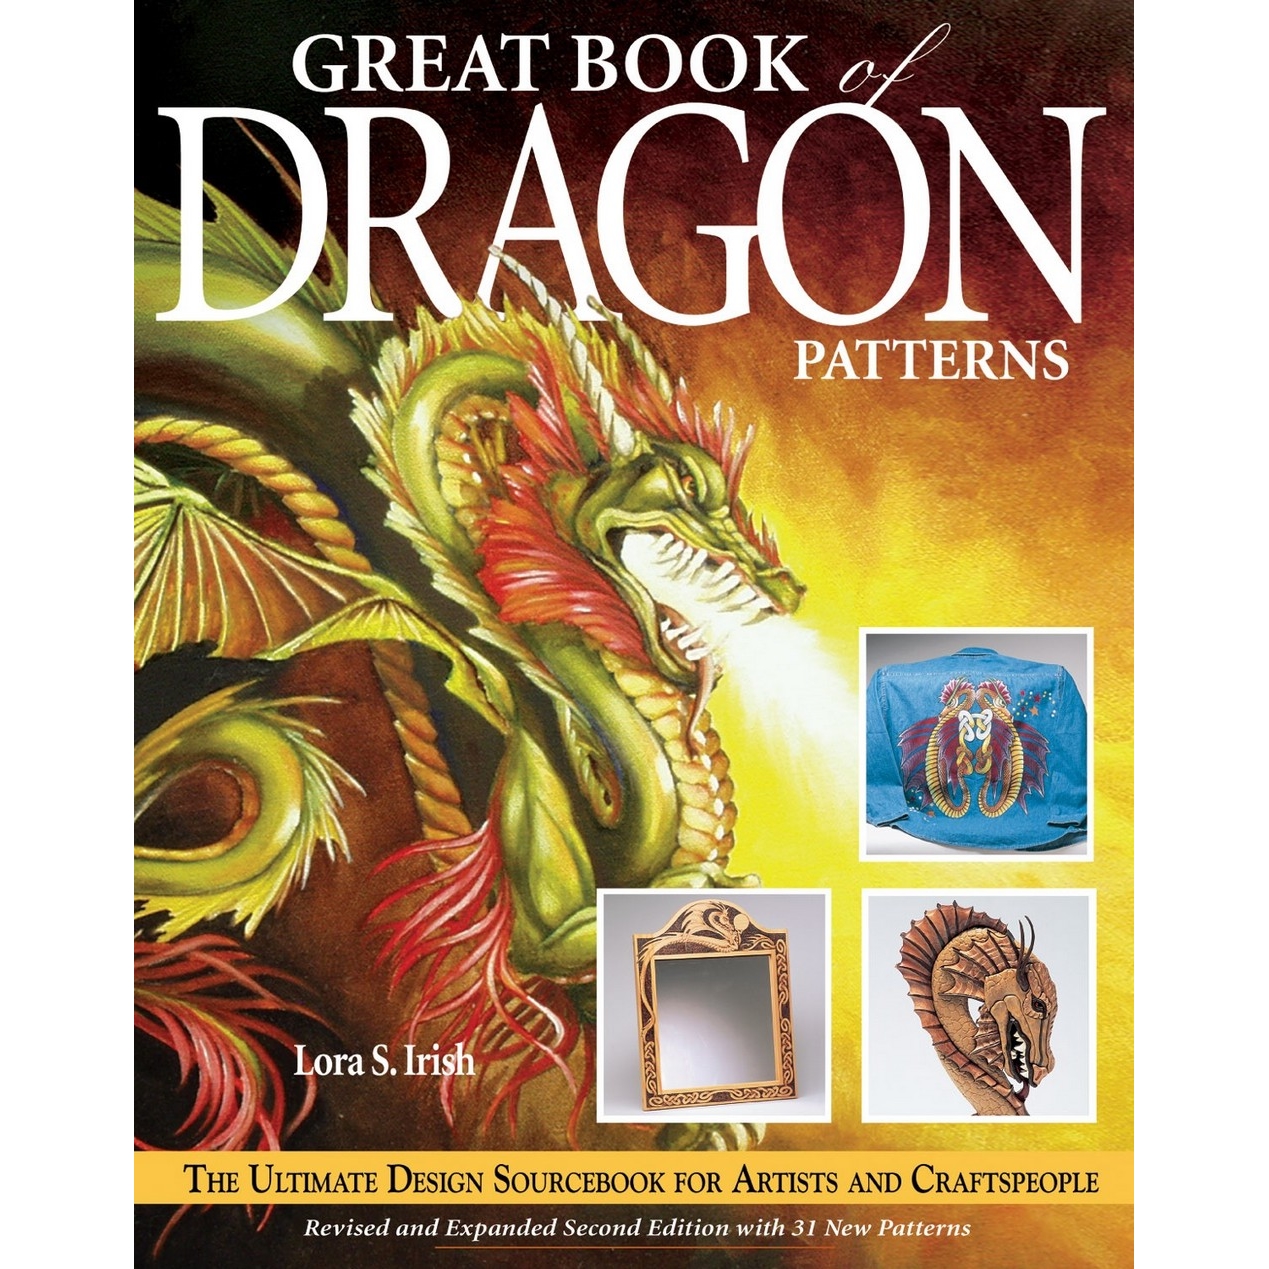 Livre "great book of dragon"